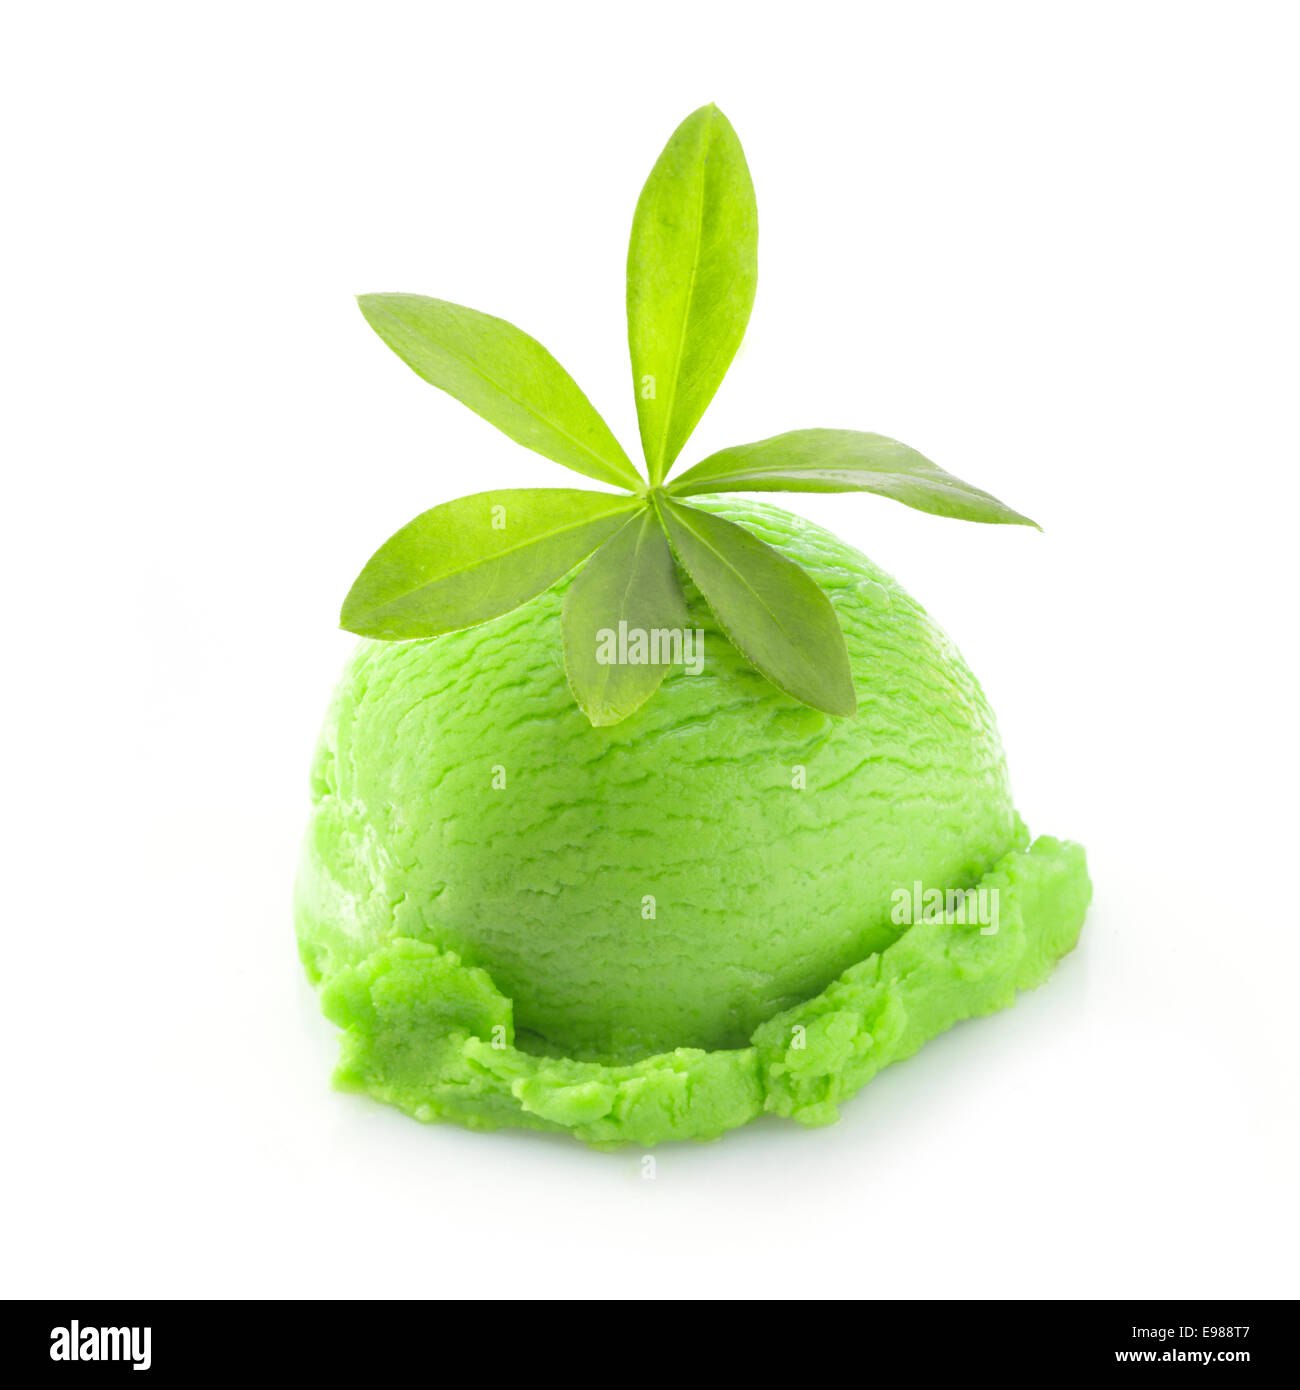 Icecream with woodruff flavor. Isolated on white background Stock Photo